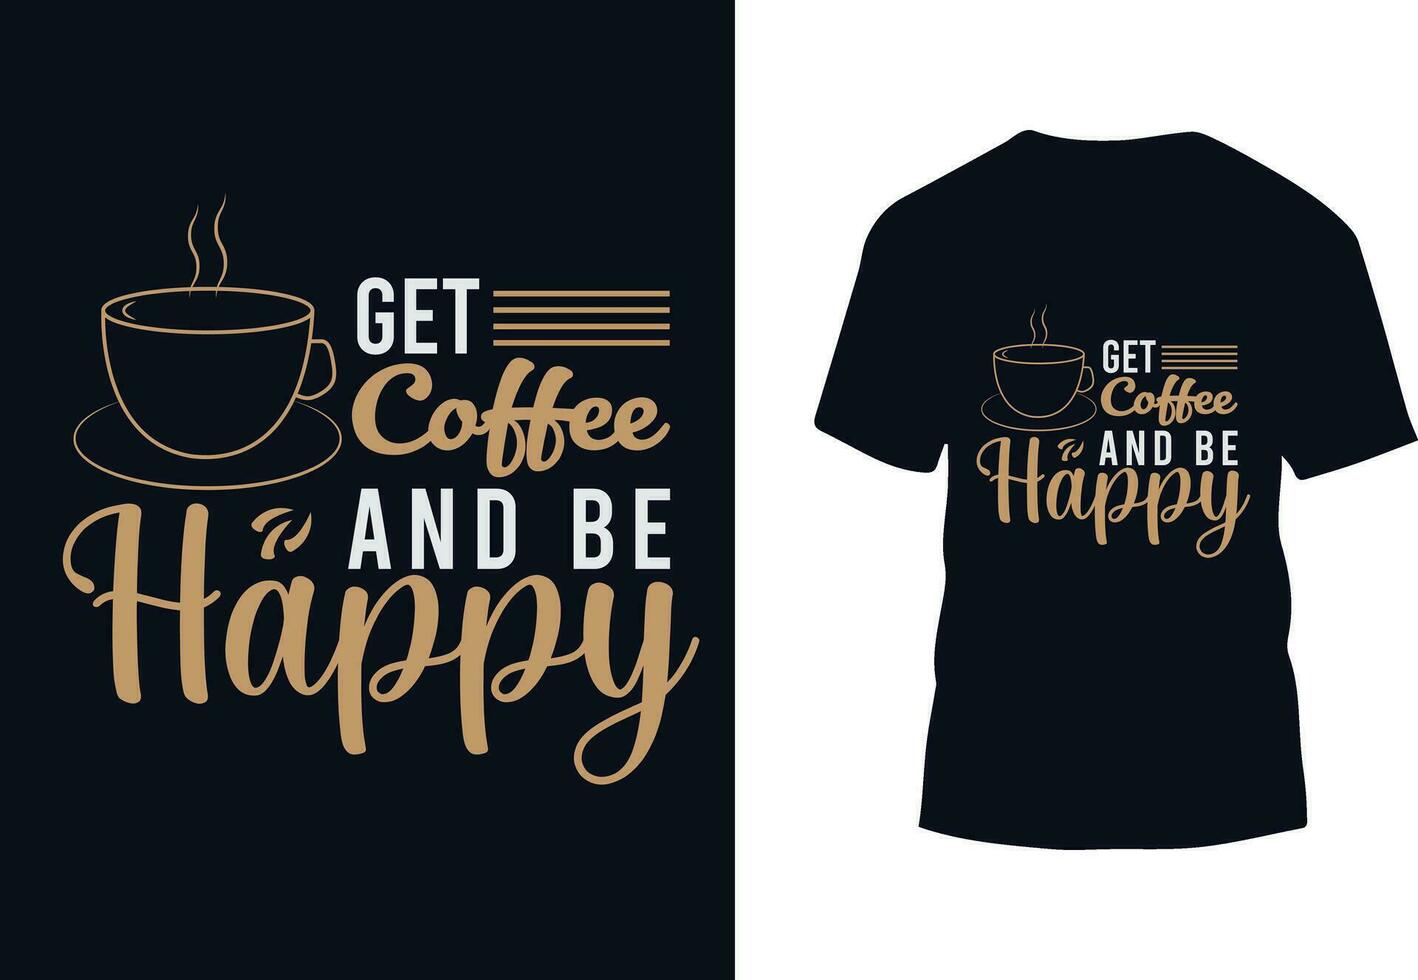 Kaffee-Typografie-T-Shirt-Designvektor vektor